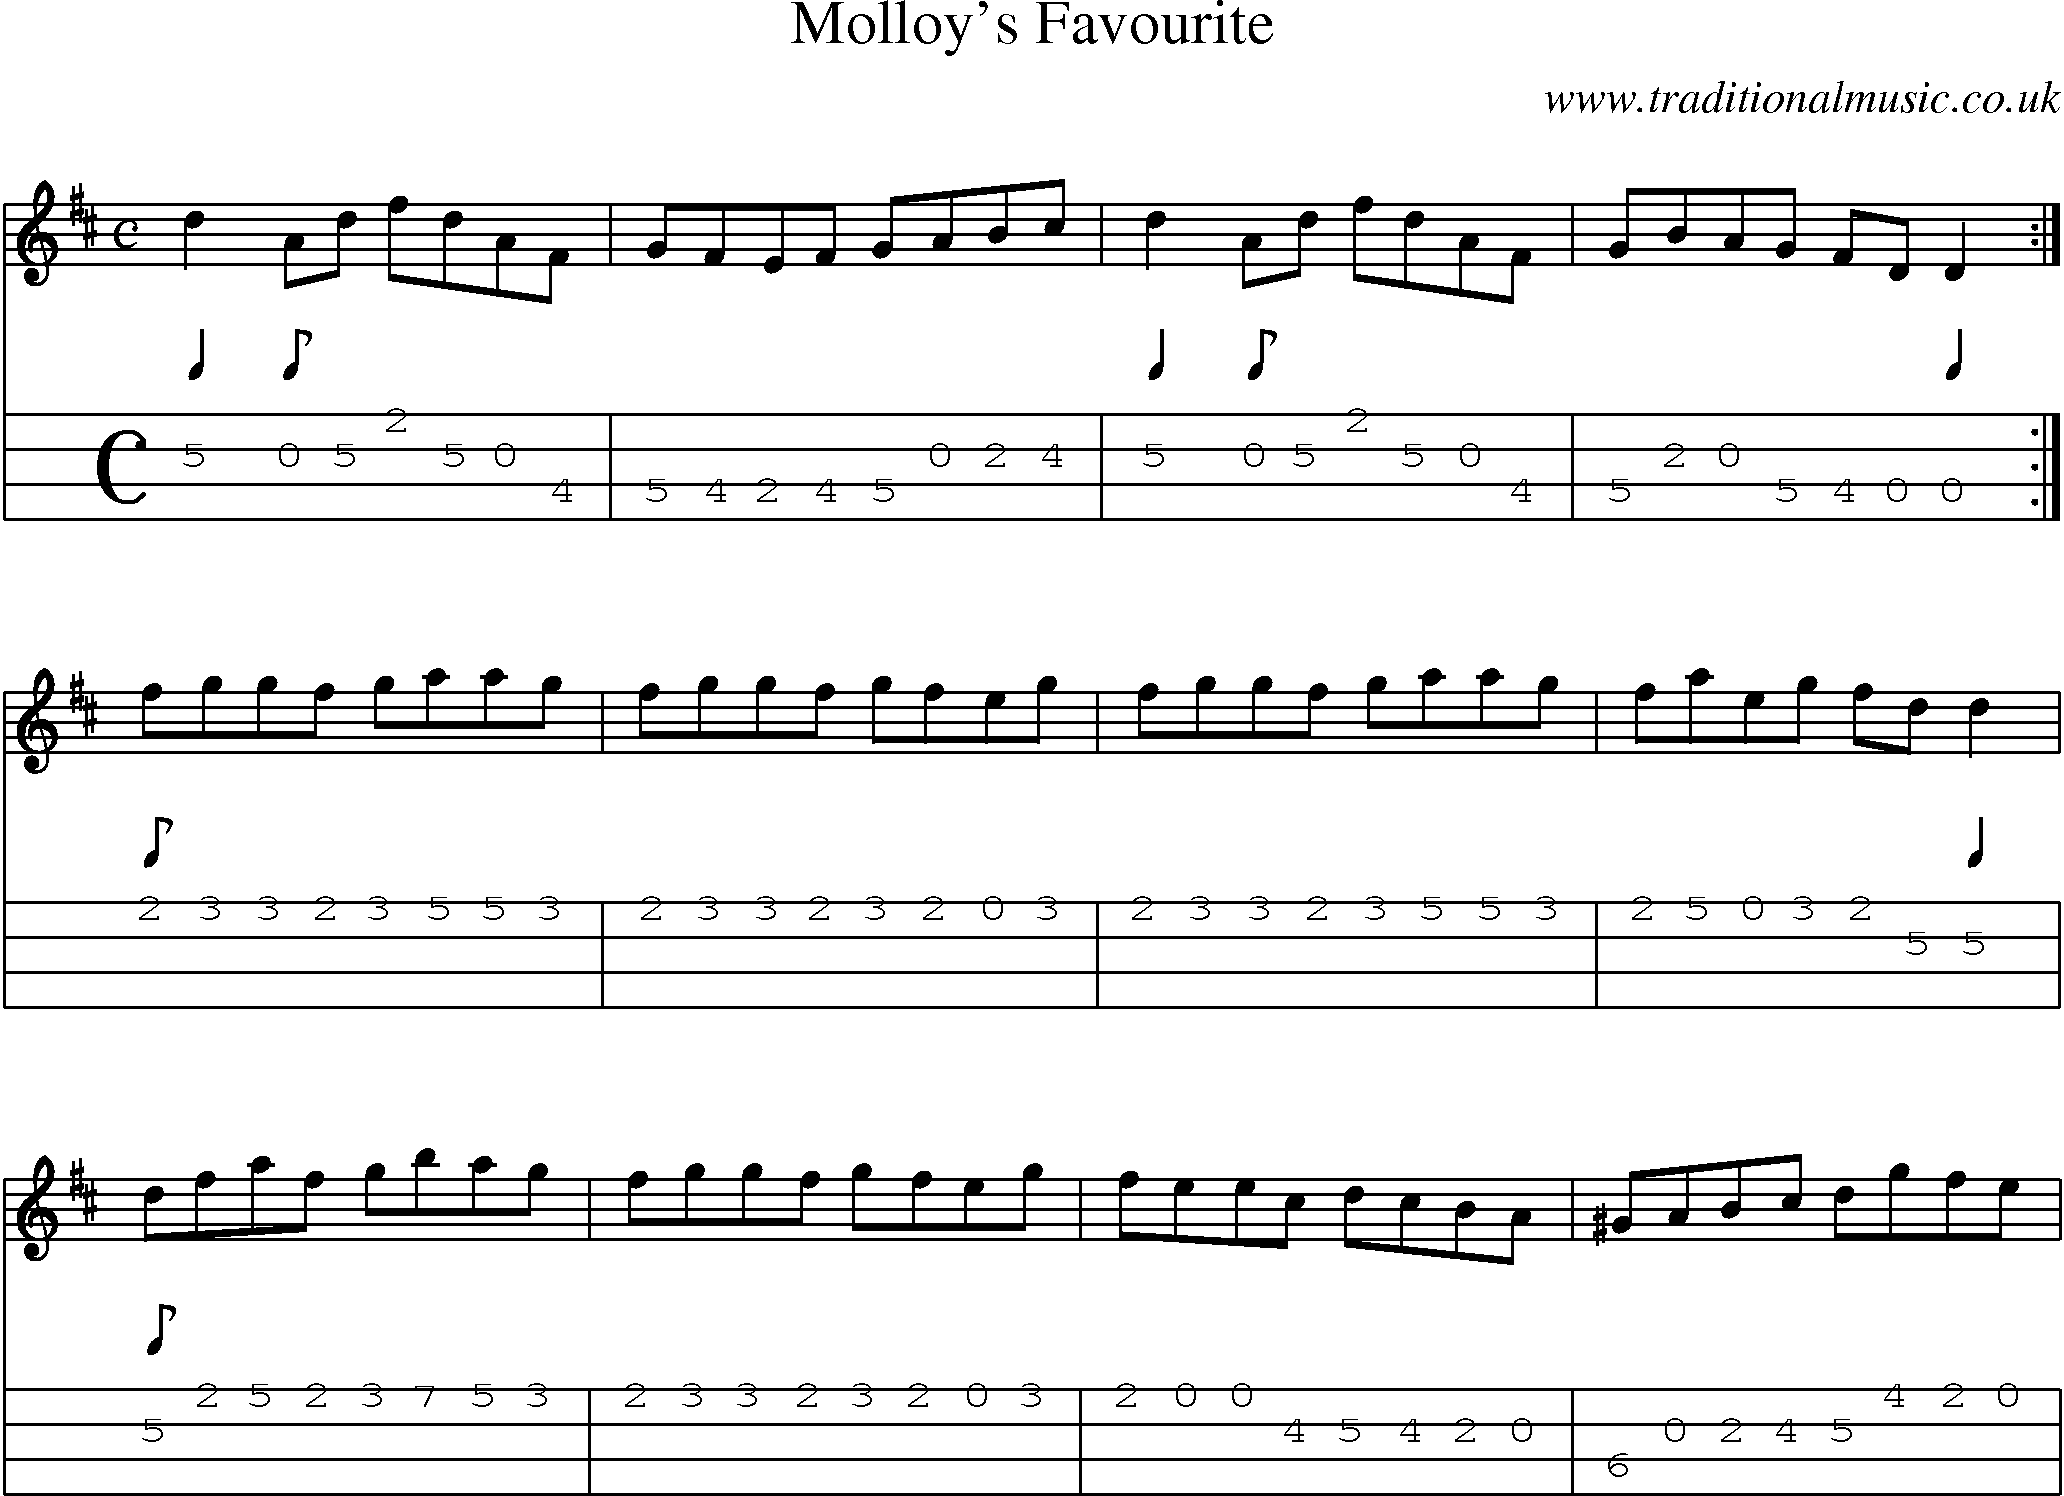 Music Score and Mandolin Tabs for Molloys Favourite